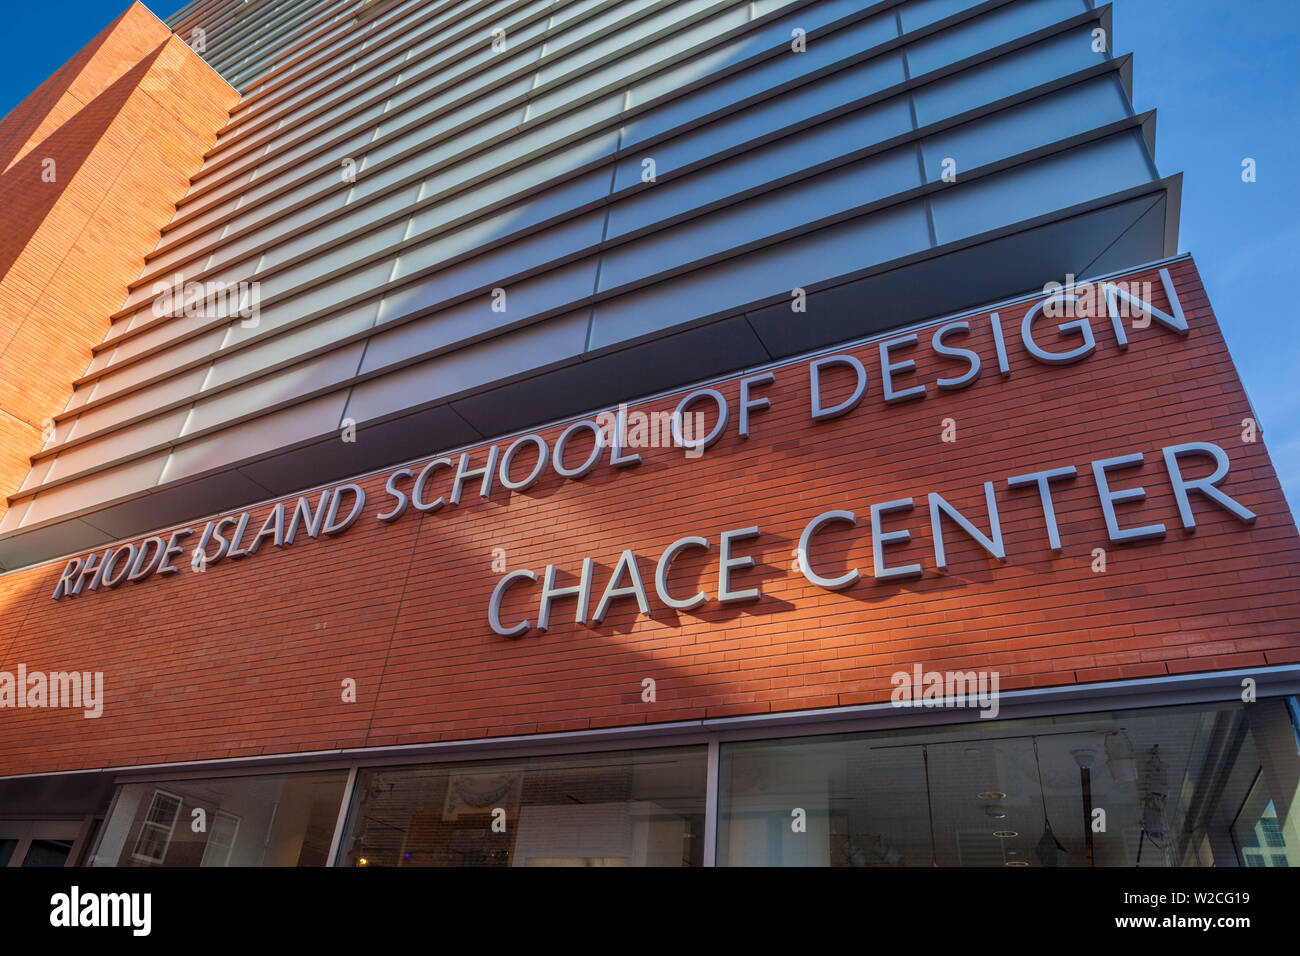 USA, Rhode Island, Providence, Rhode Island School of Design, RISD, Chace Center Stock Photo